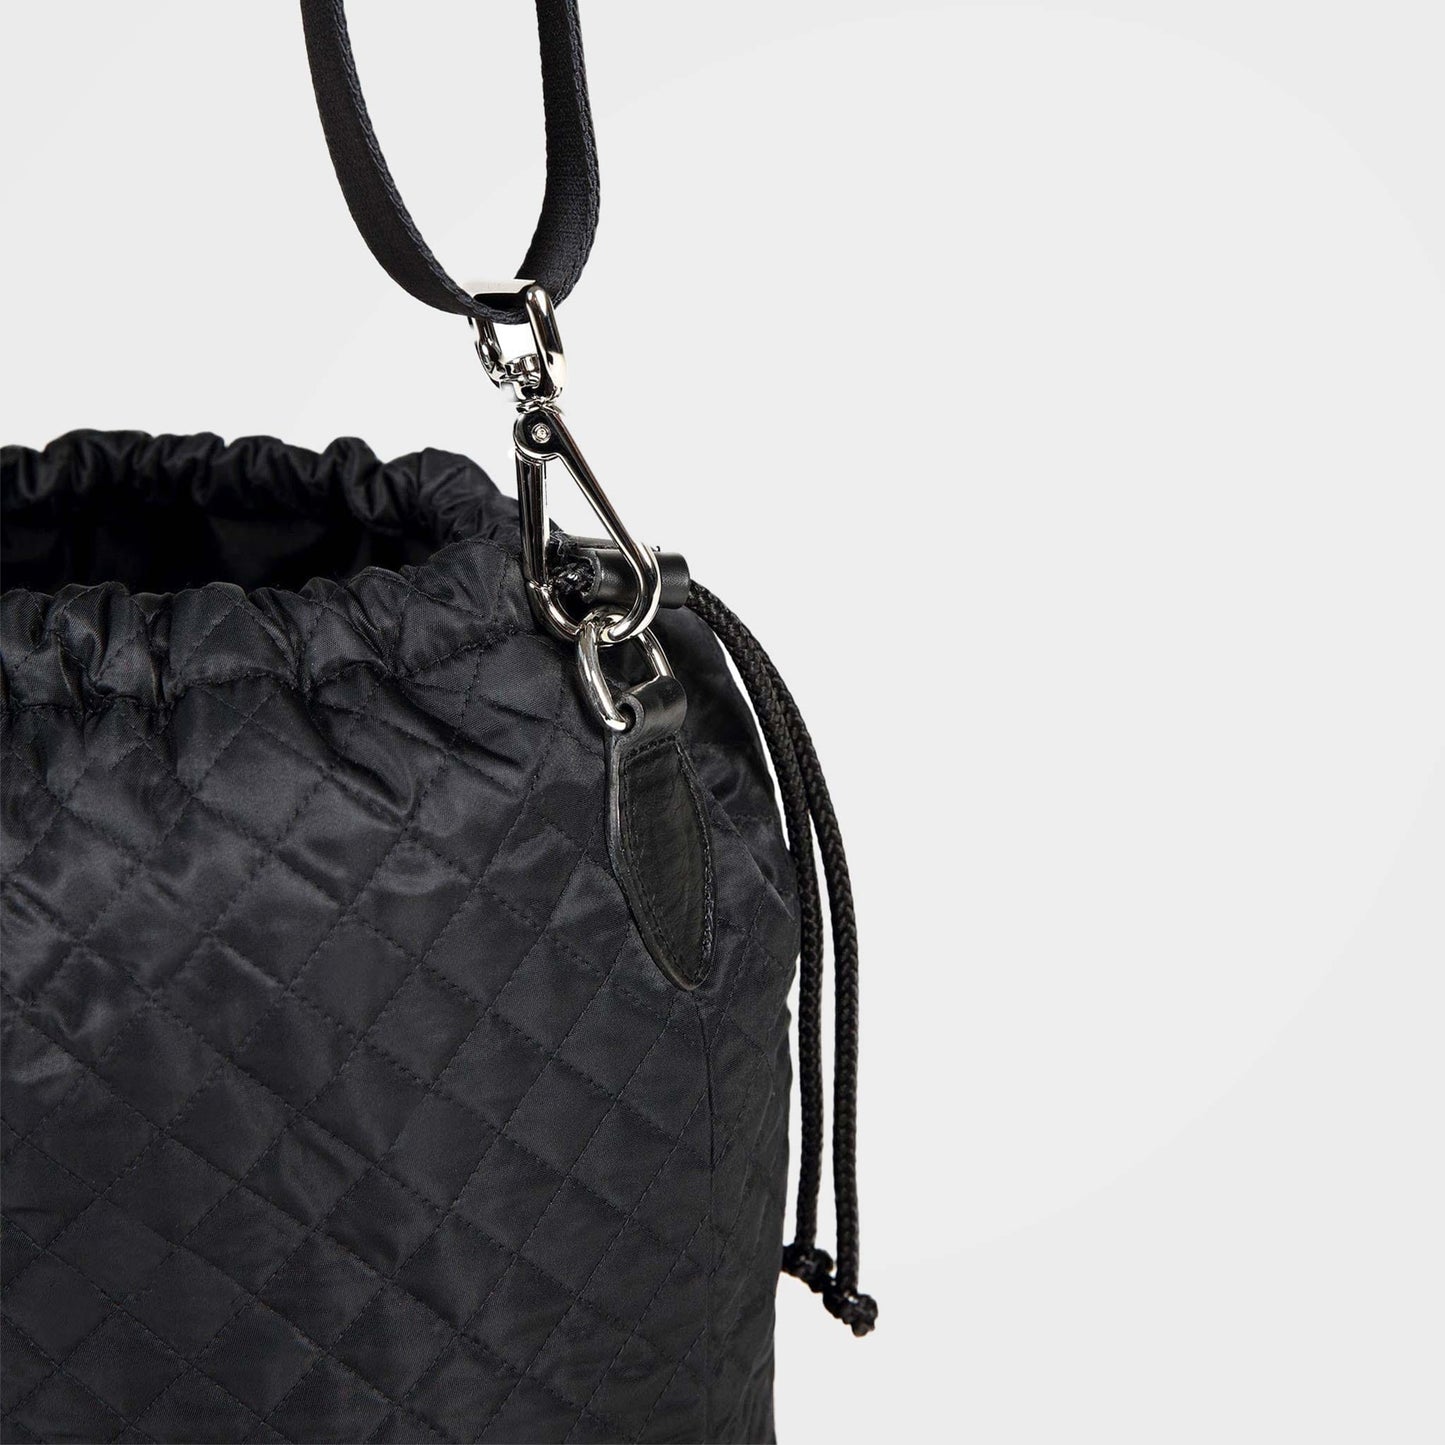 Women's Crossbody Bag, Mandi | Black - By ASK